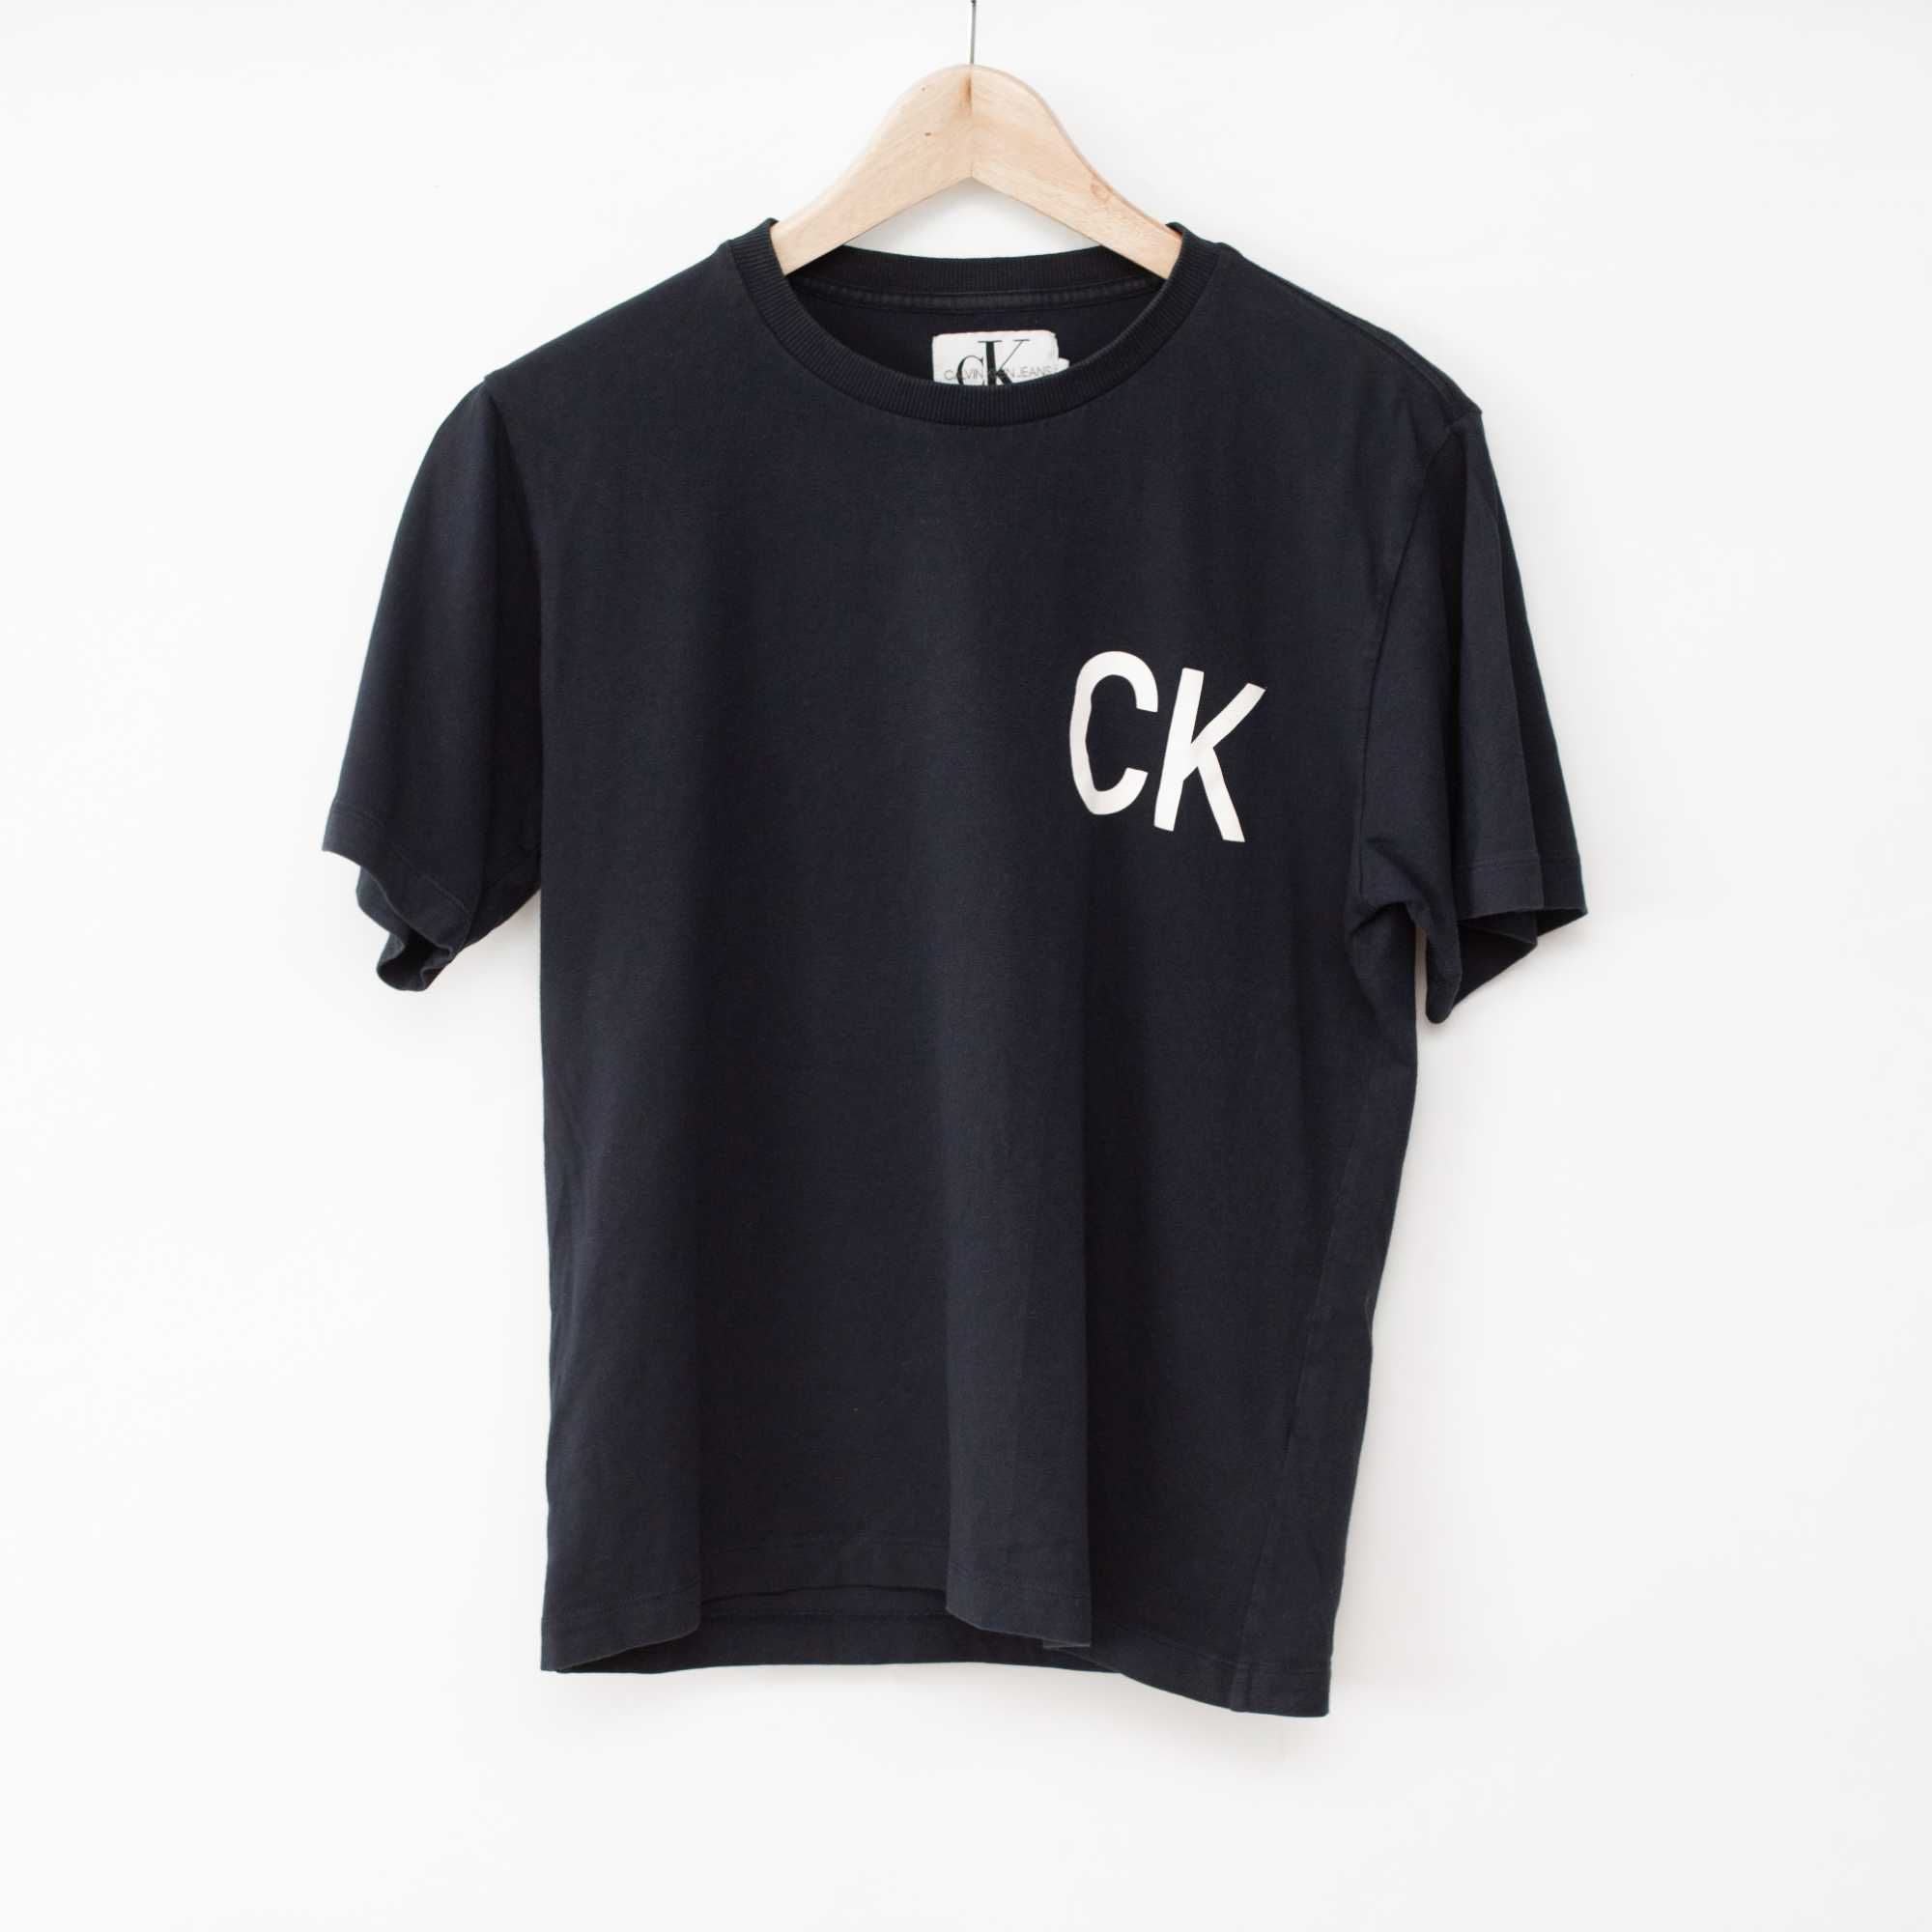 T-shirt koszulka marki Calvin Klein rozmiar S/M